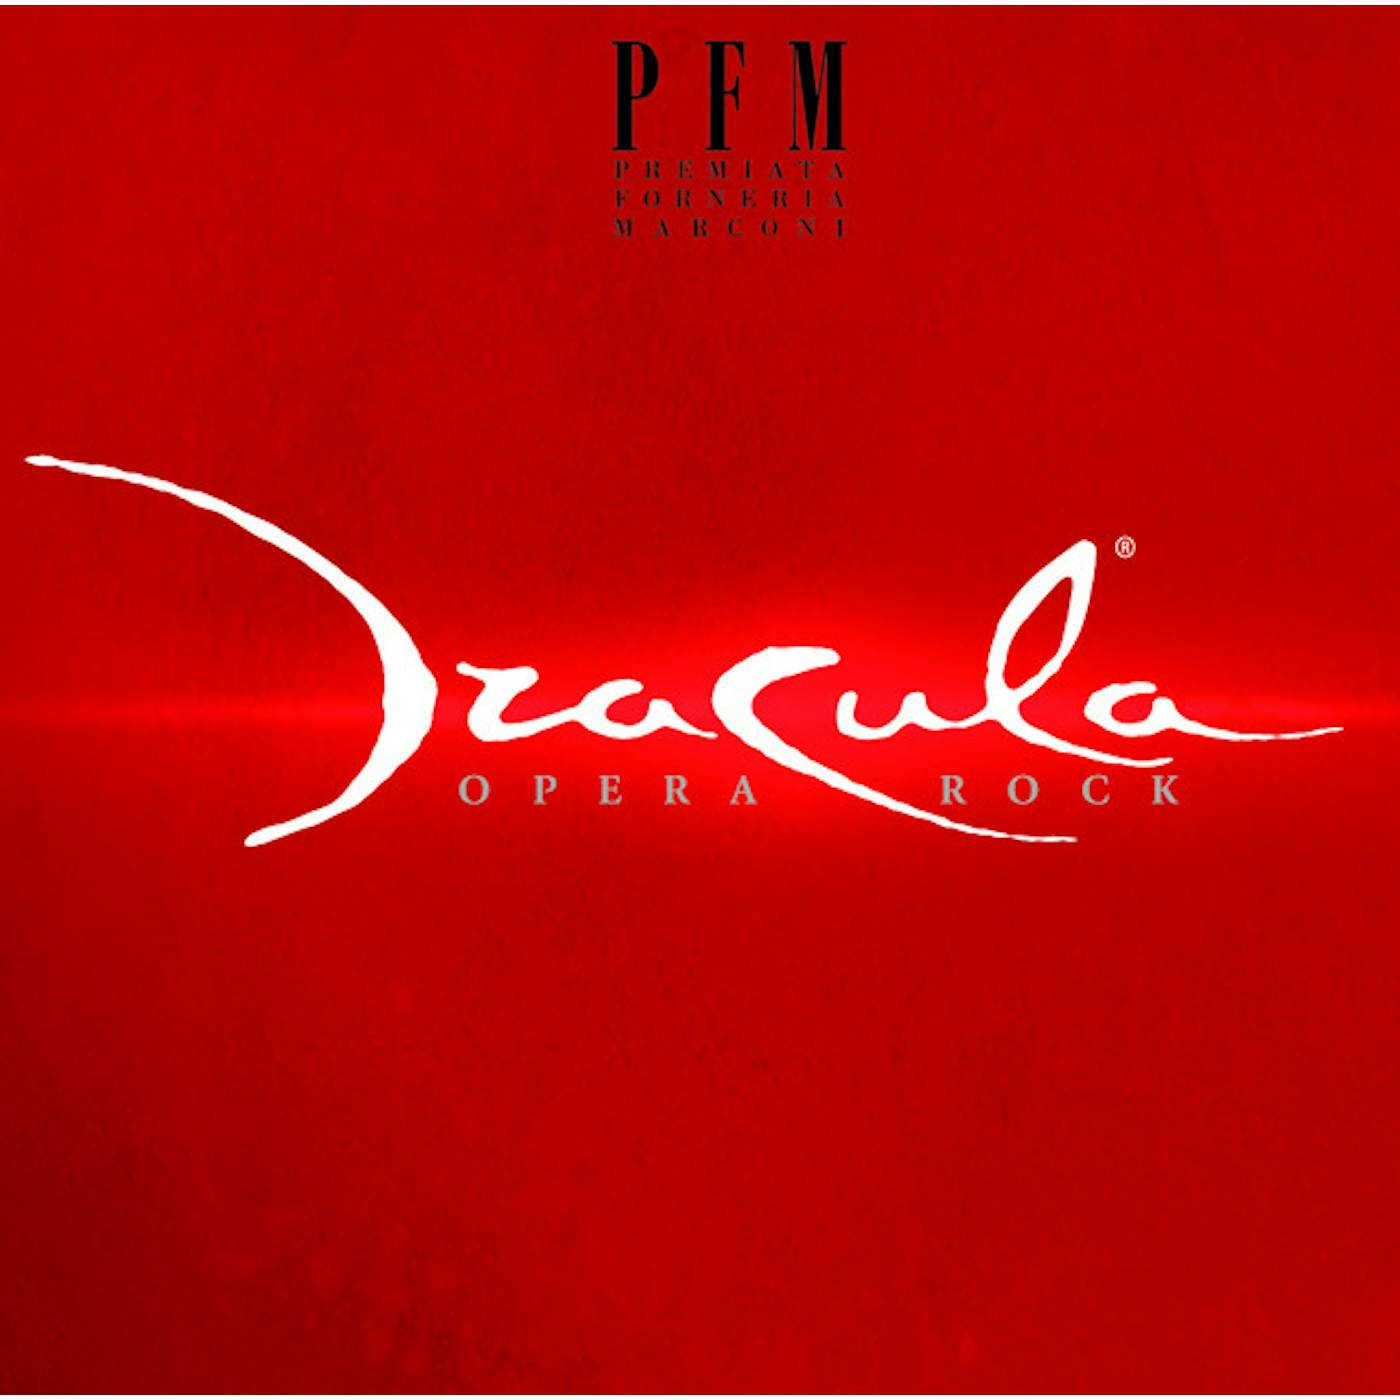 PFM DRACULA OPERA ROCK CD